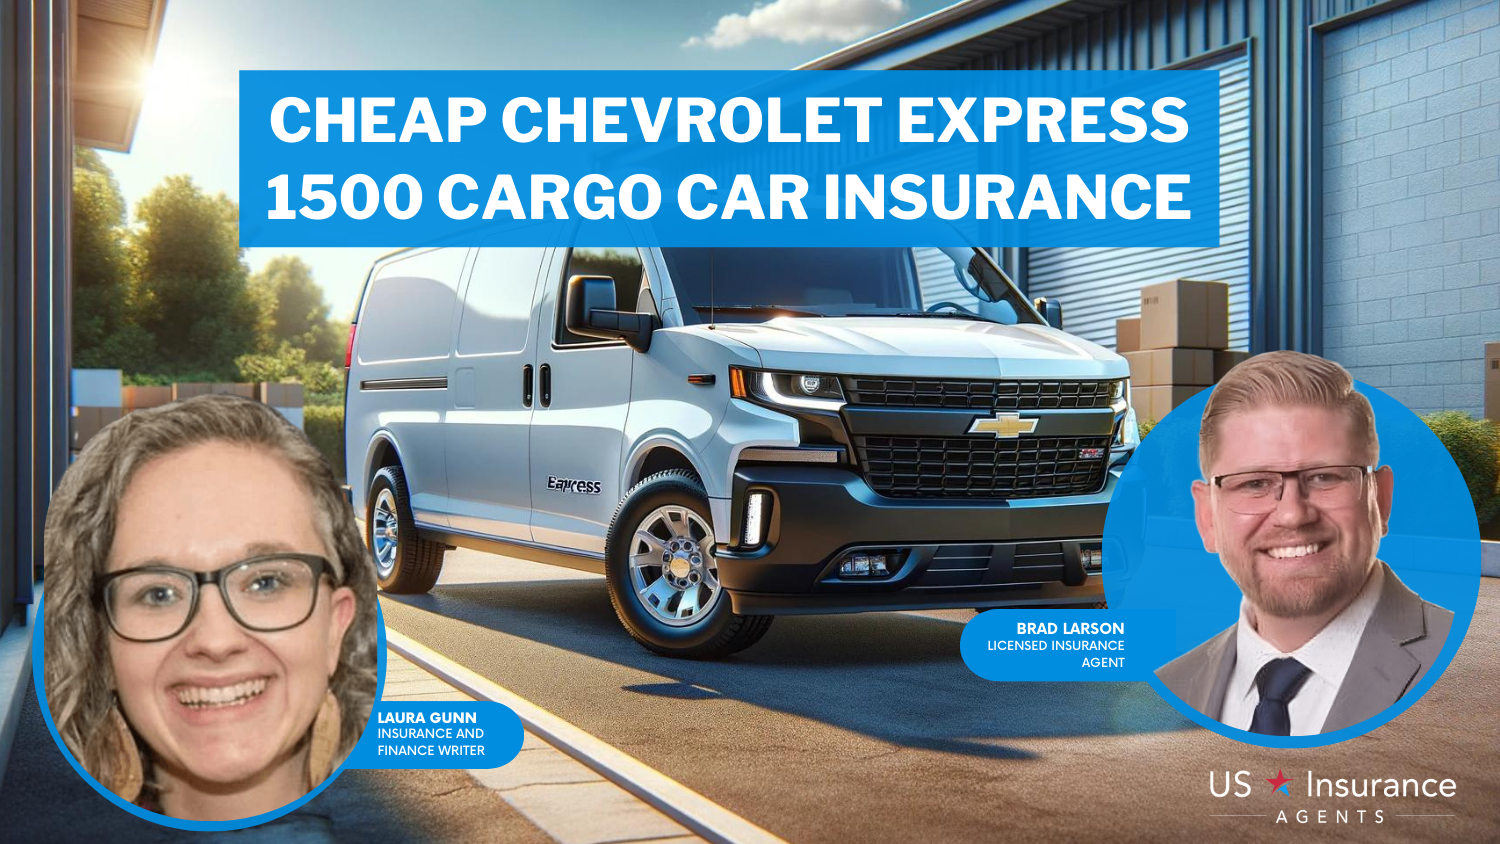 Cheap Chevrolet Express 1500 Cargo Car Insurance: Progressive, USAA, and State Farm